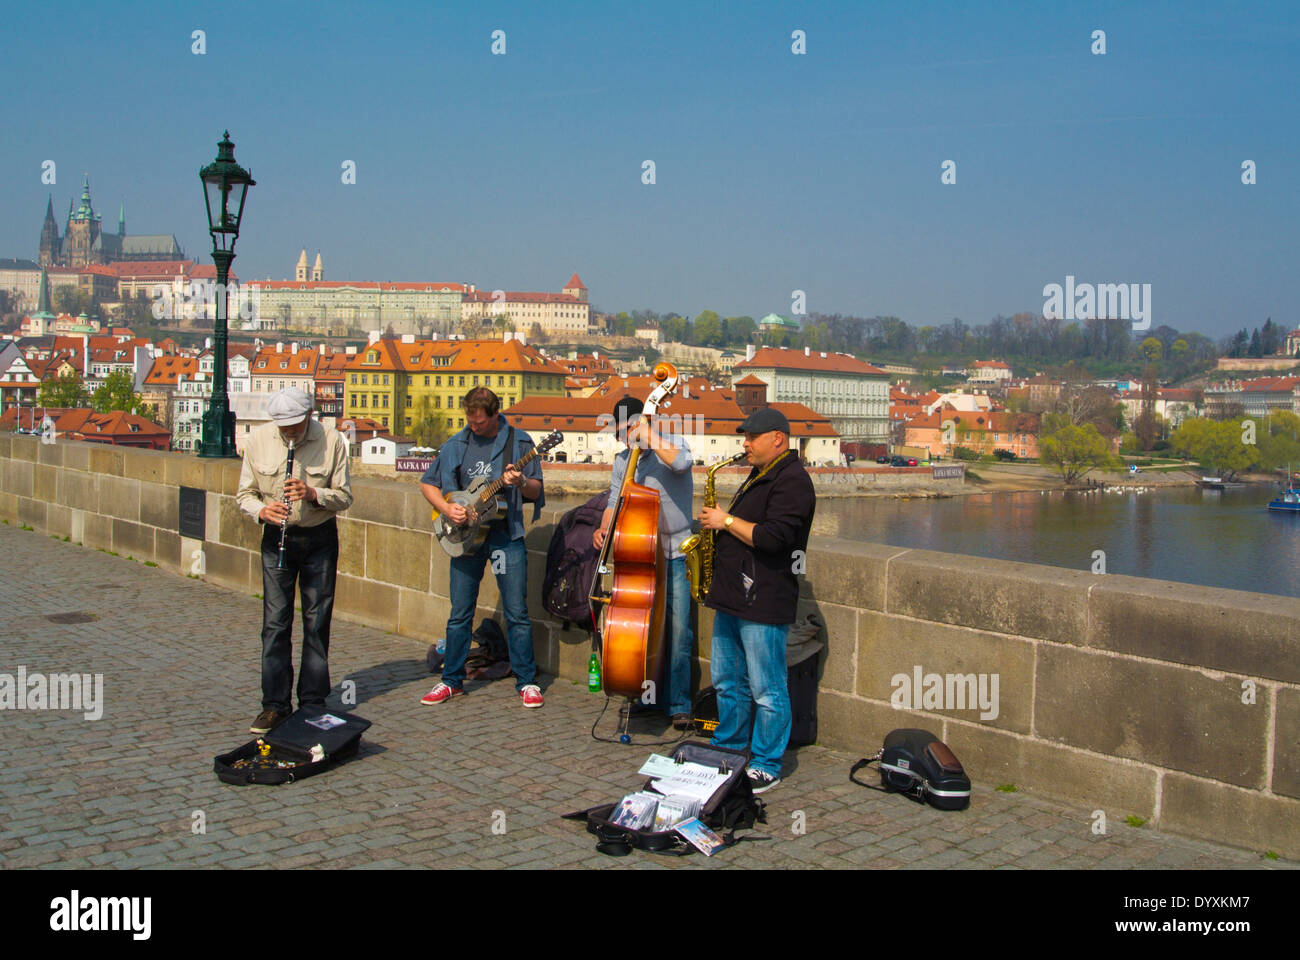 Band, music performed, Karluv most, Charles Bridge, Prague, Czech Republic, Europe Stock Photo